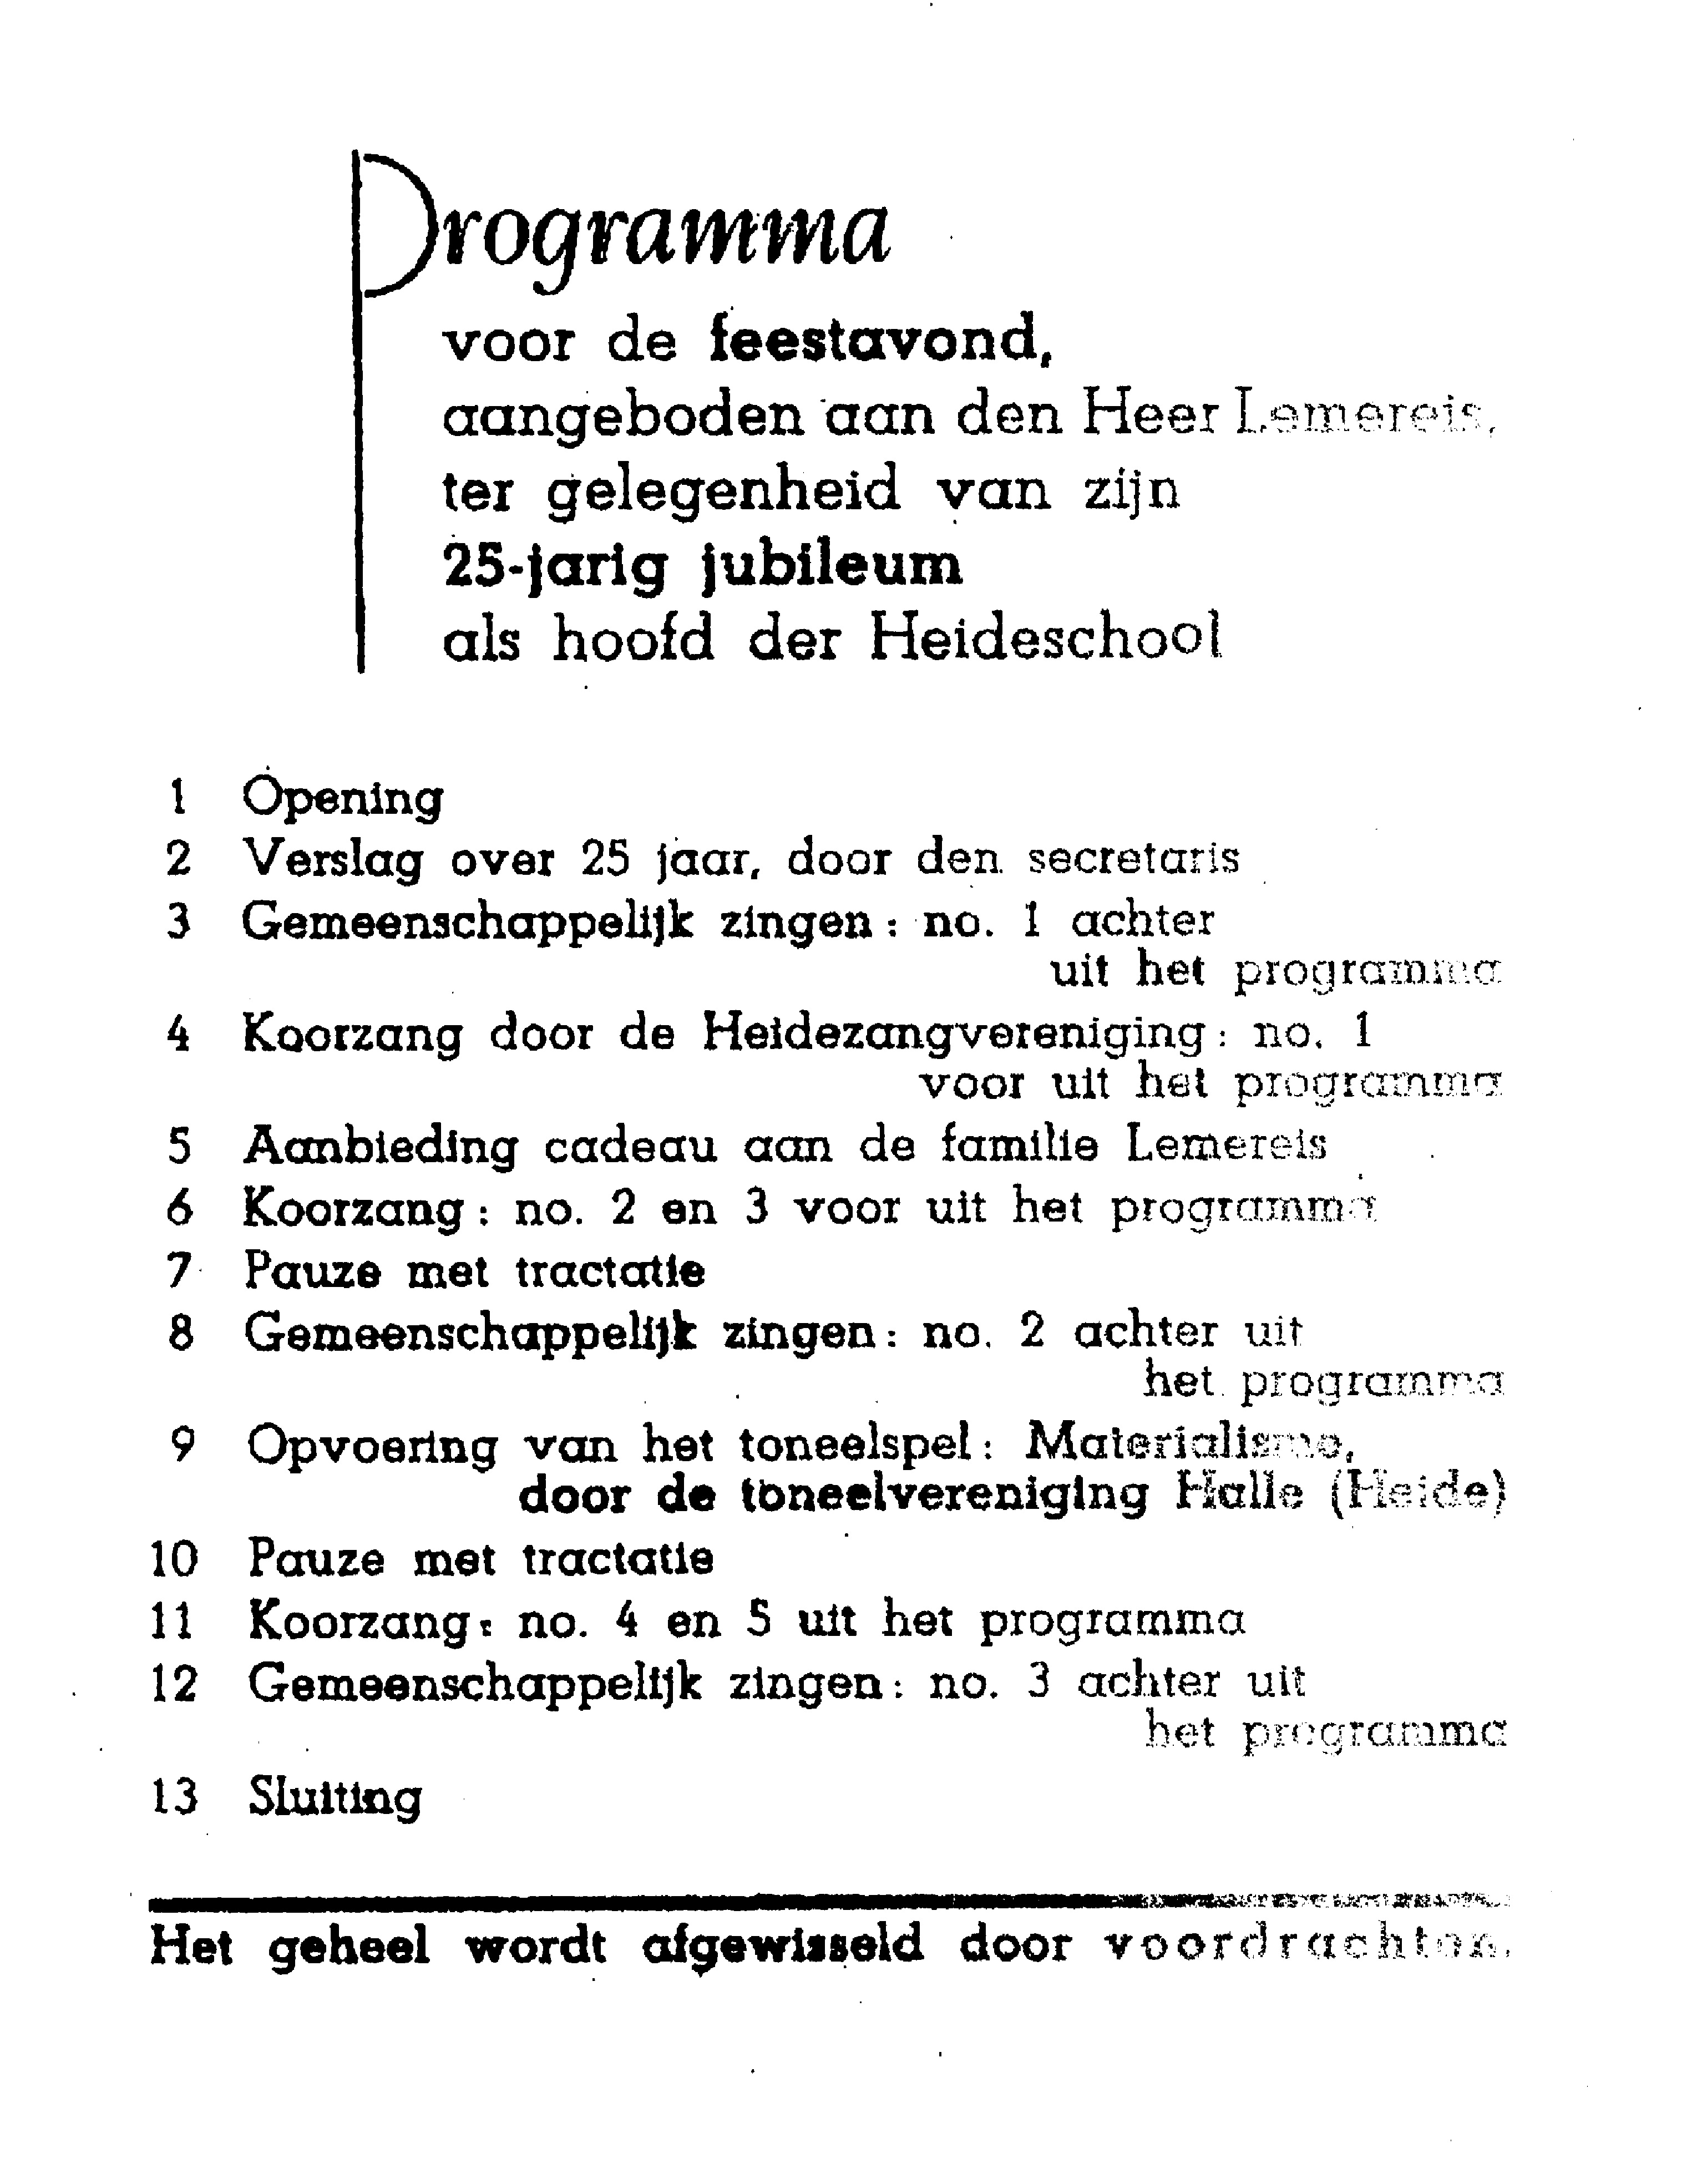 1947 programma